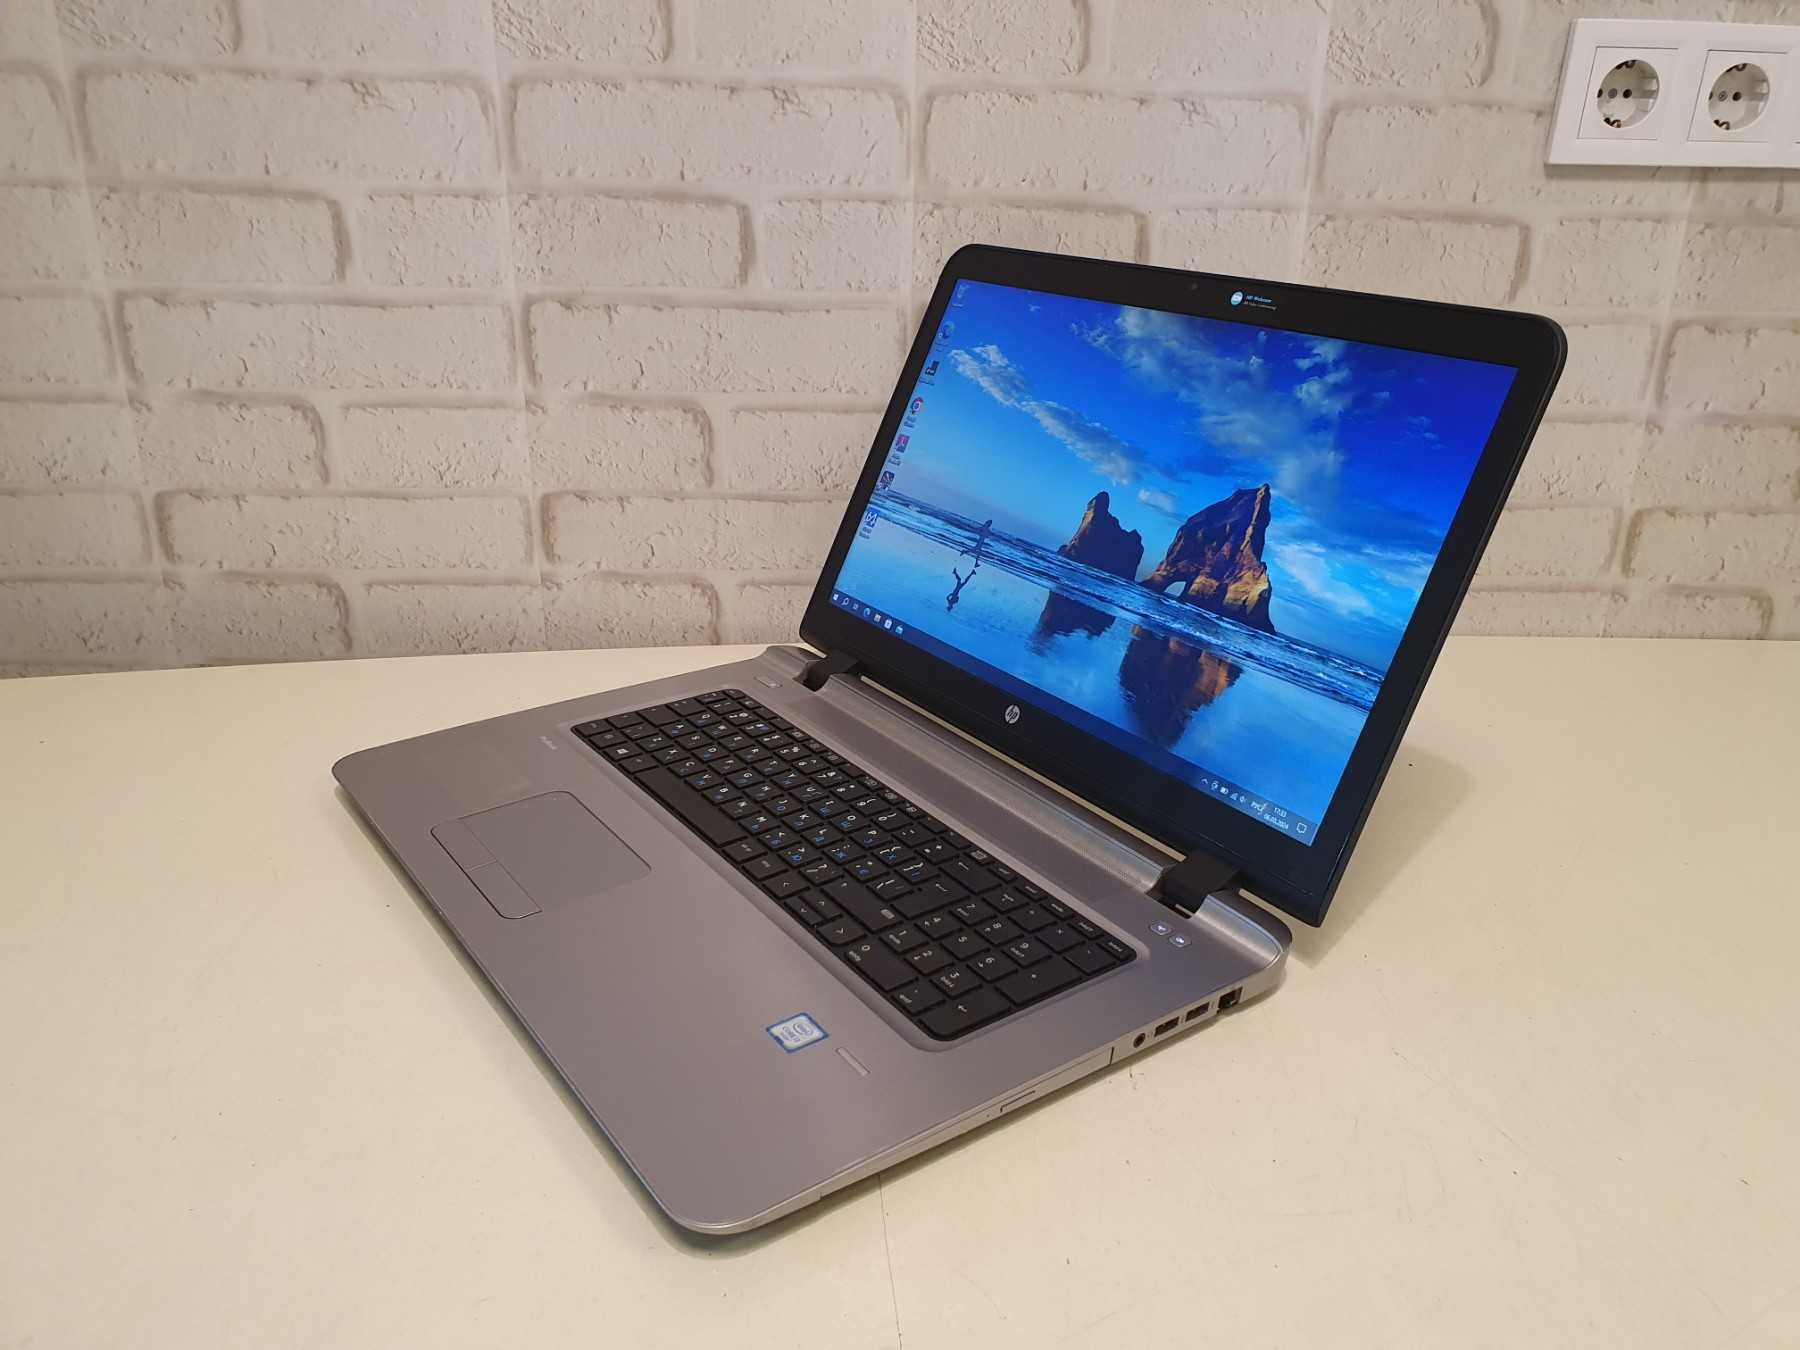 Ноутбук HP 470 G3 ∎17.3" экран∎ i3-6100U∎DDR4-8GB∎Radeon R7∎гар-я 1год